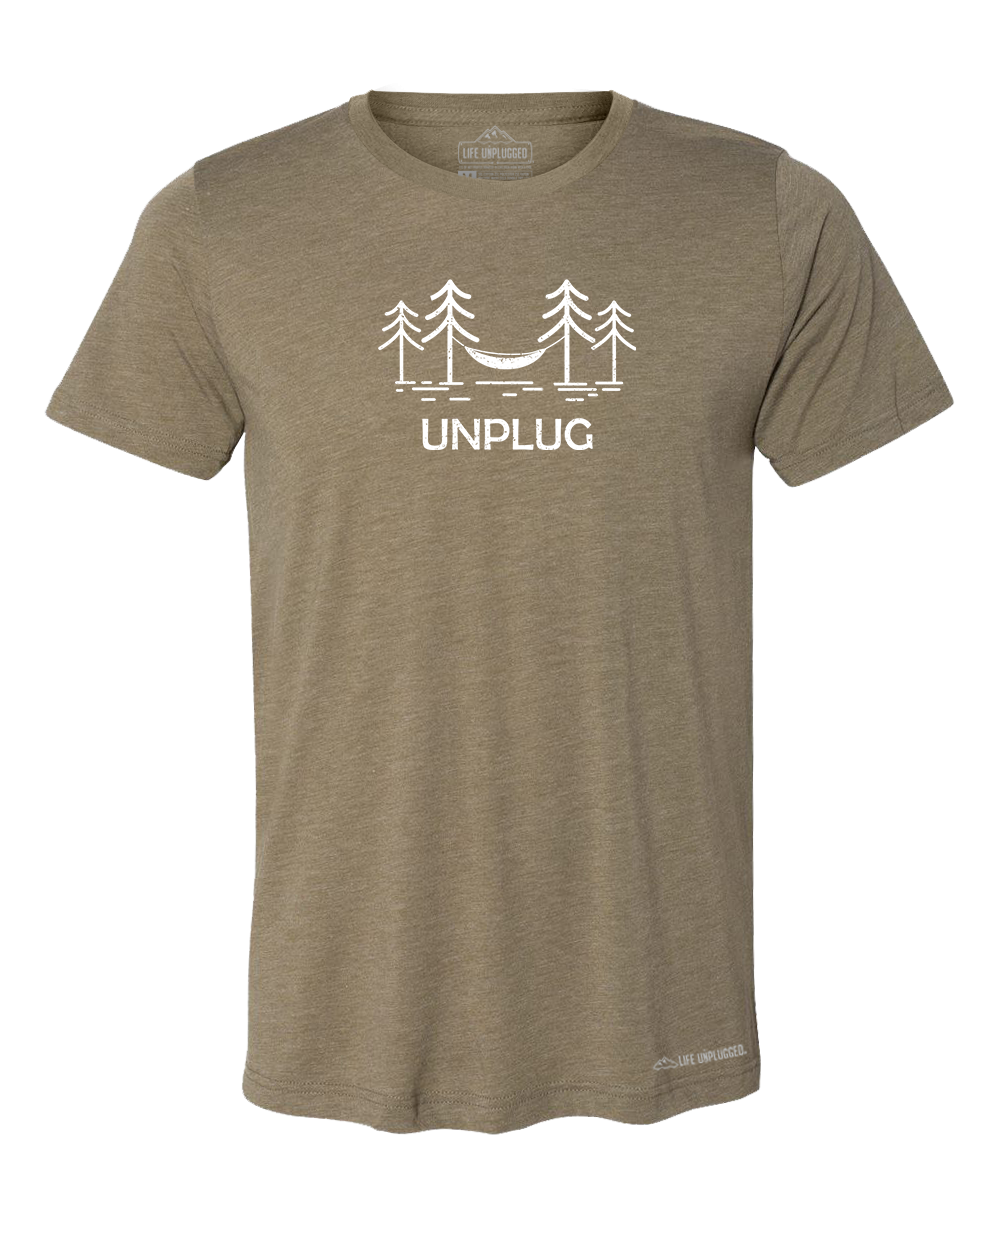 Hammocking Premium Triblend T-Shirt - Life Unplugged